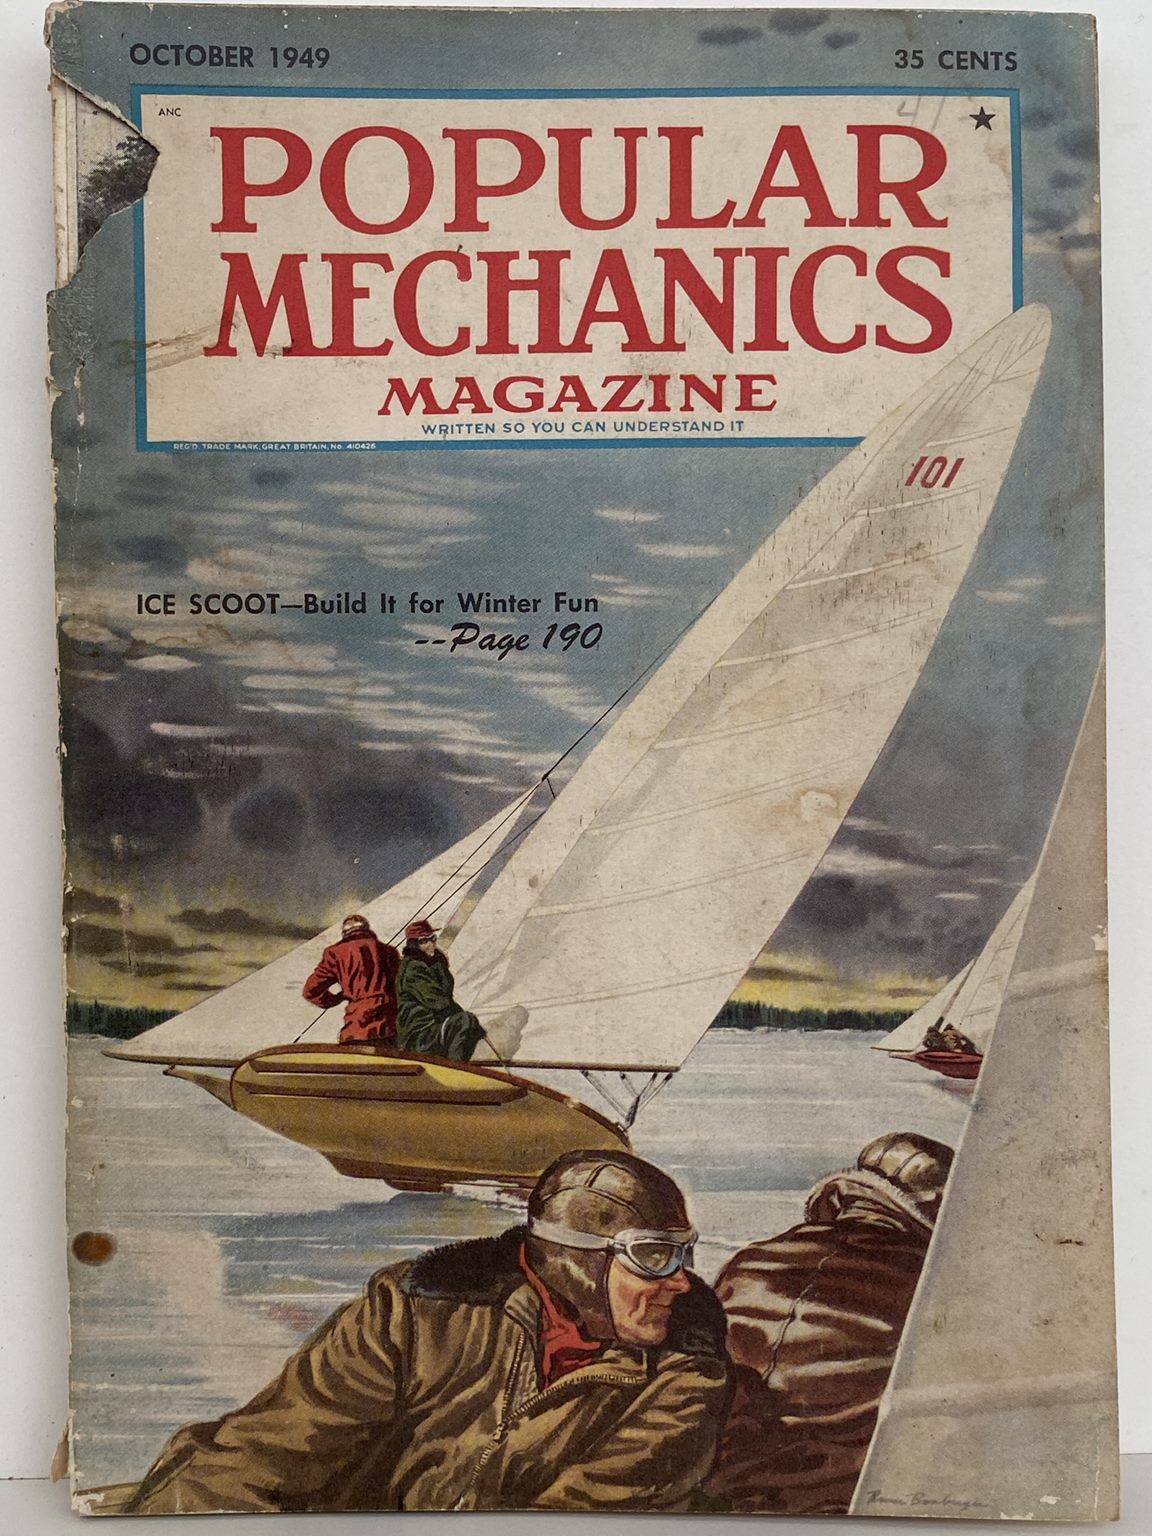 VINTAGE MAGAZINE: Popular Mechanics - Vol. 92, No. 4 - October 1949